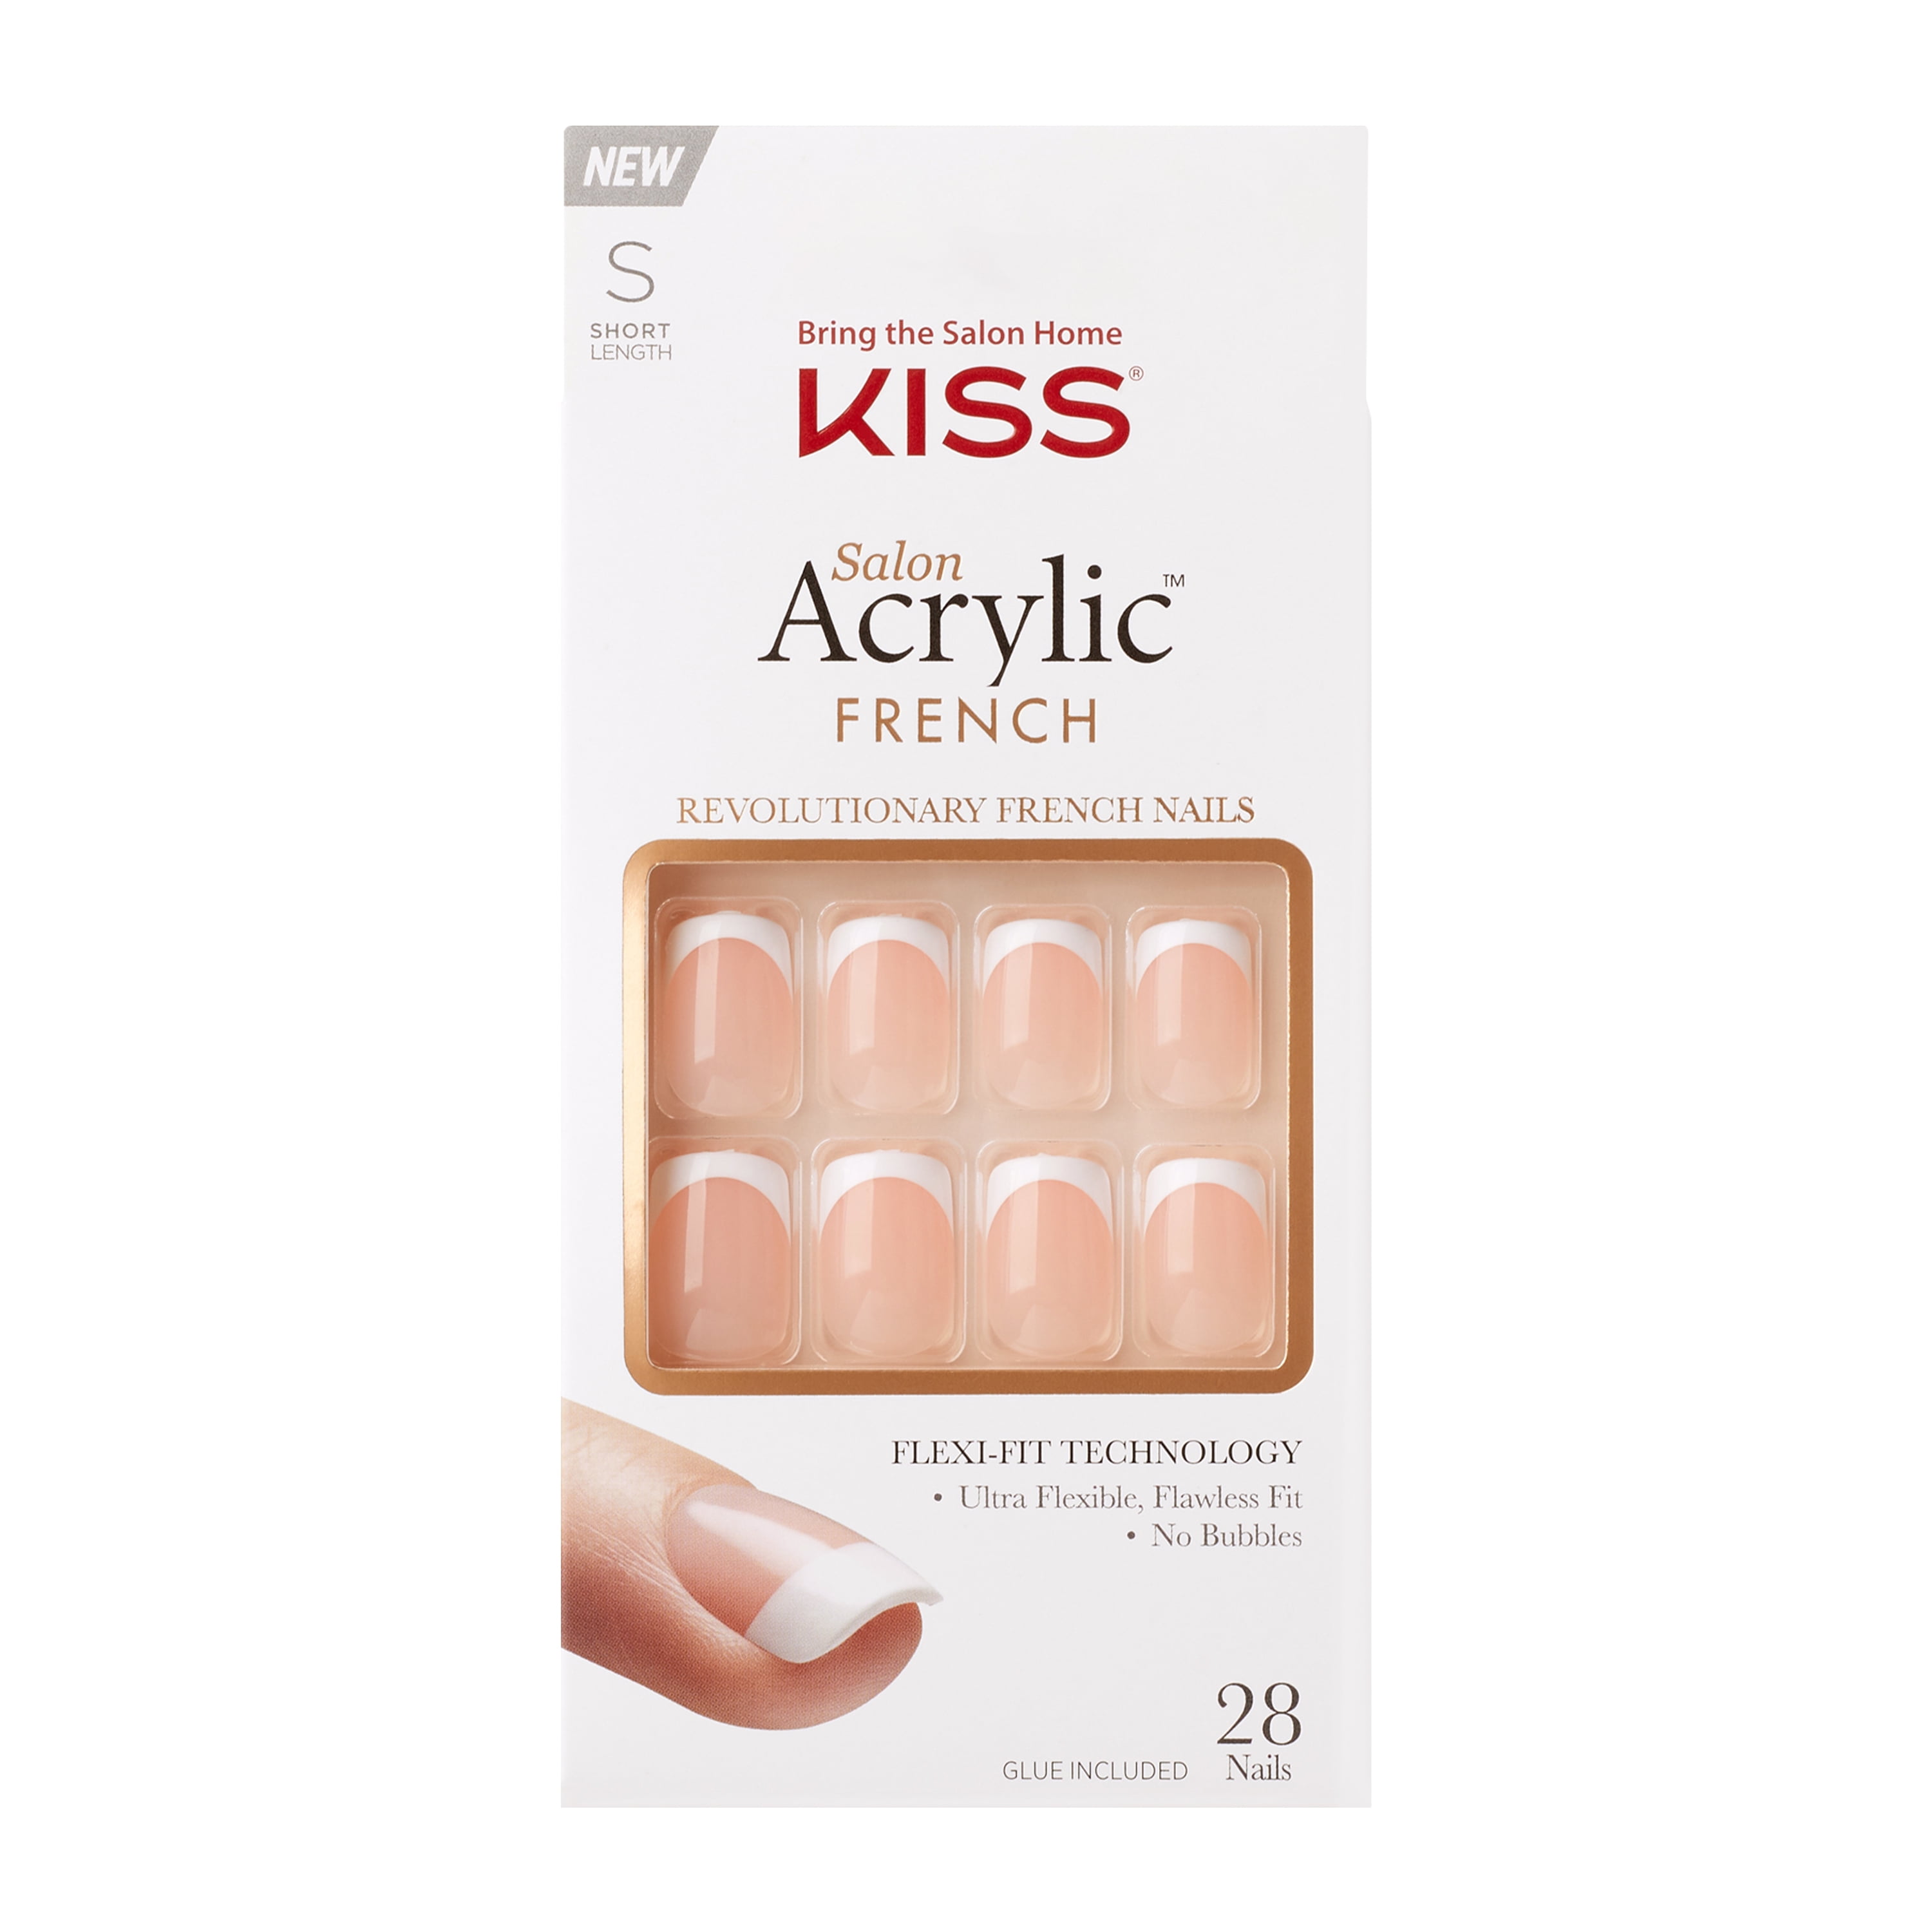 KISS USA Salon Acrylic French Nail Kit, Bonjour, Short - Walmart.com